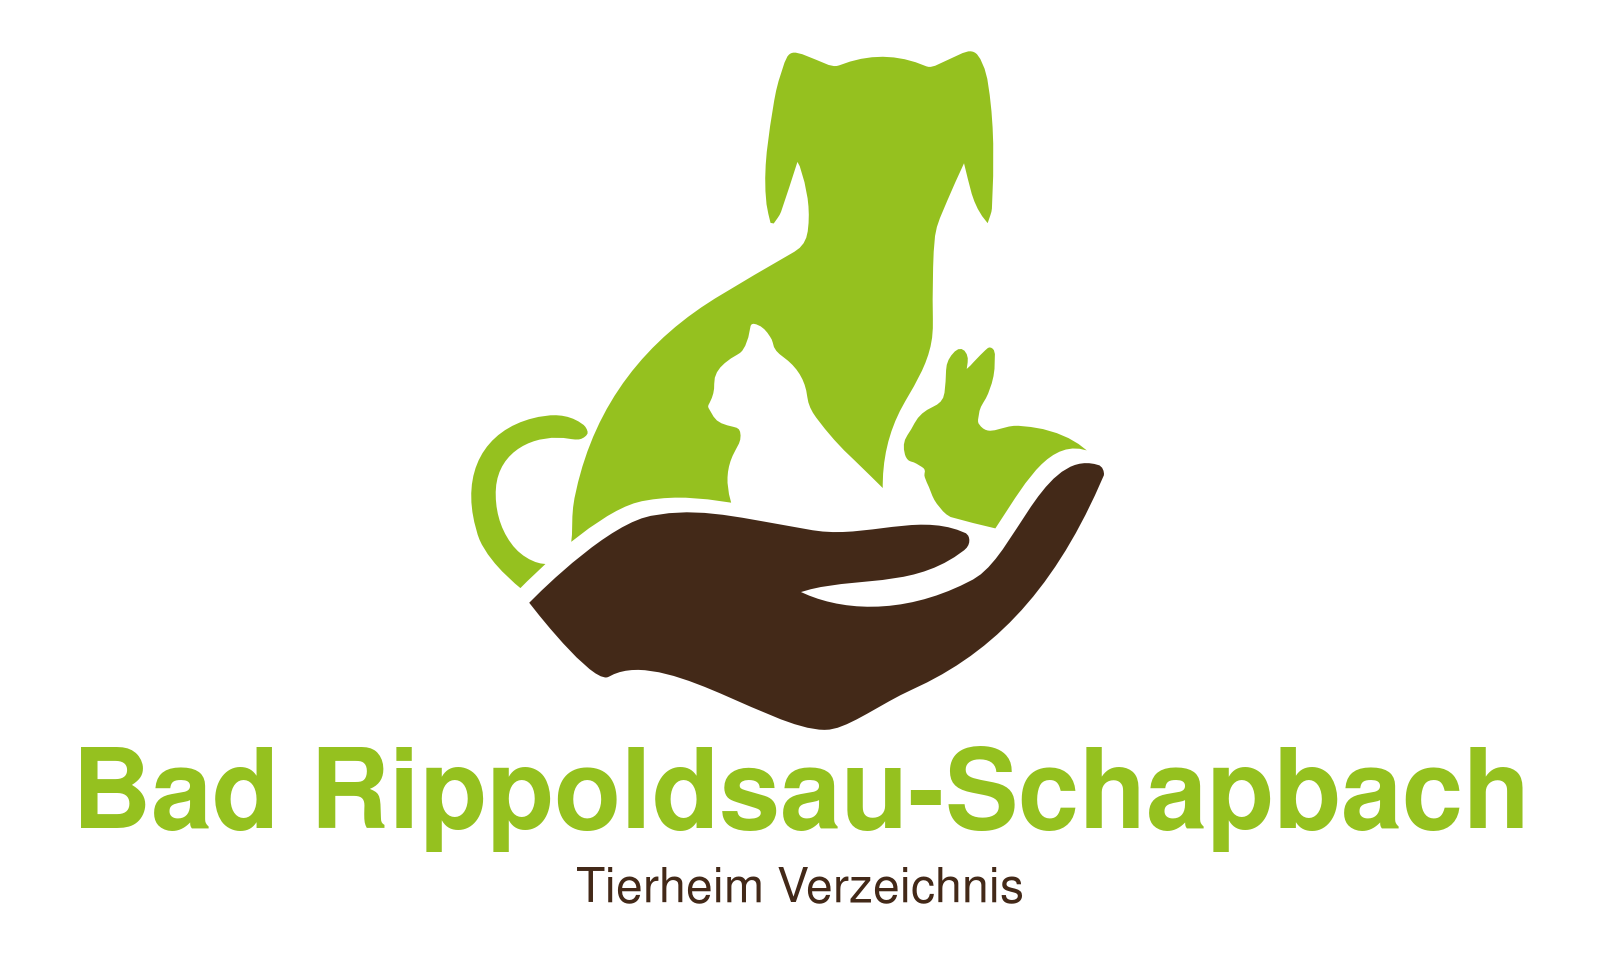 Tierheim Bad Rippoldsau-Schapbach